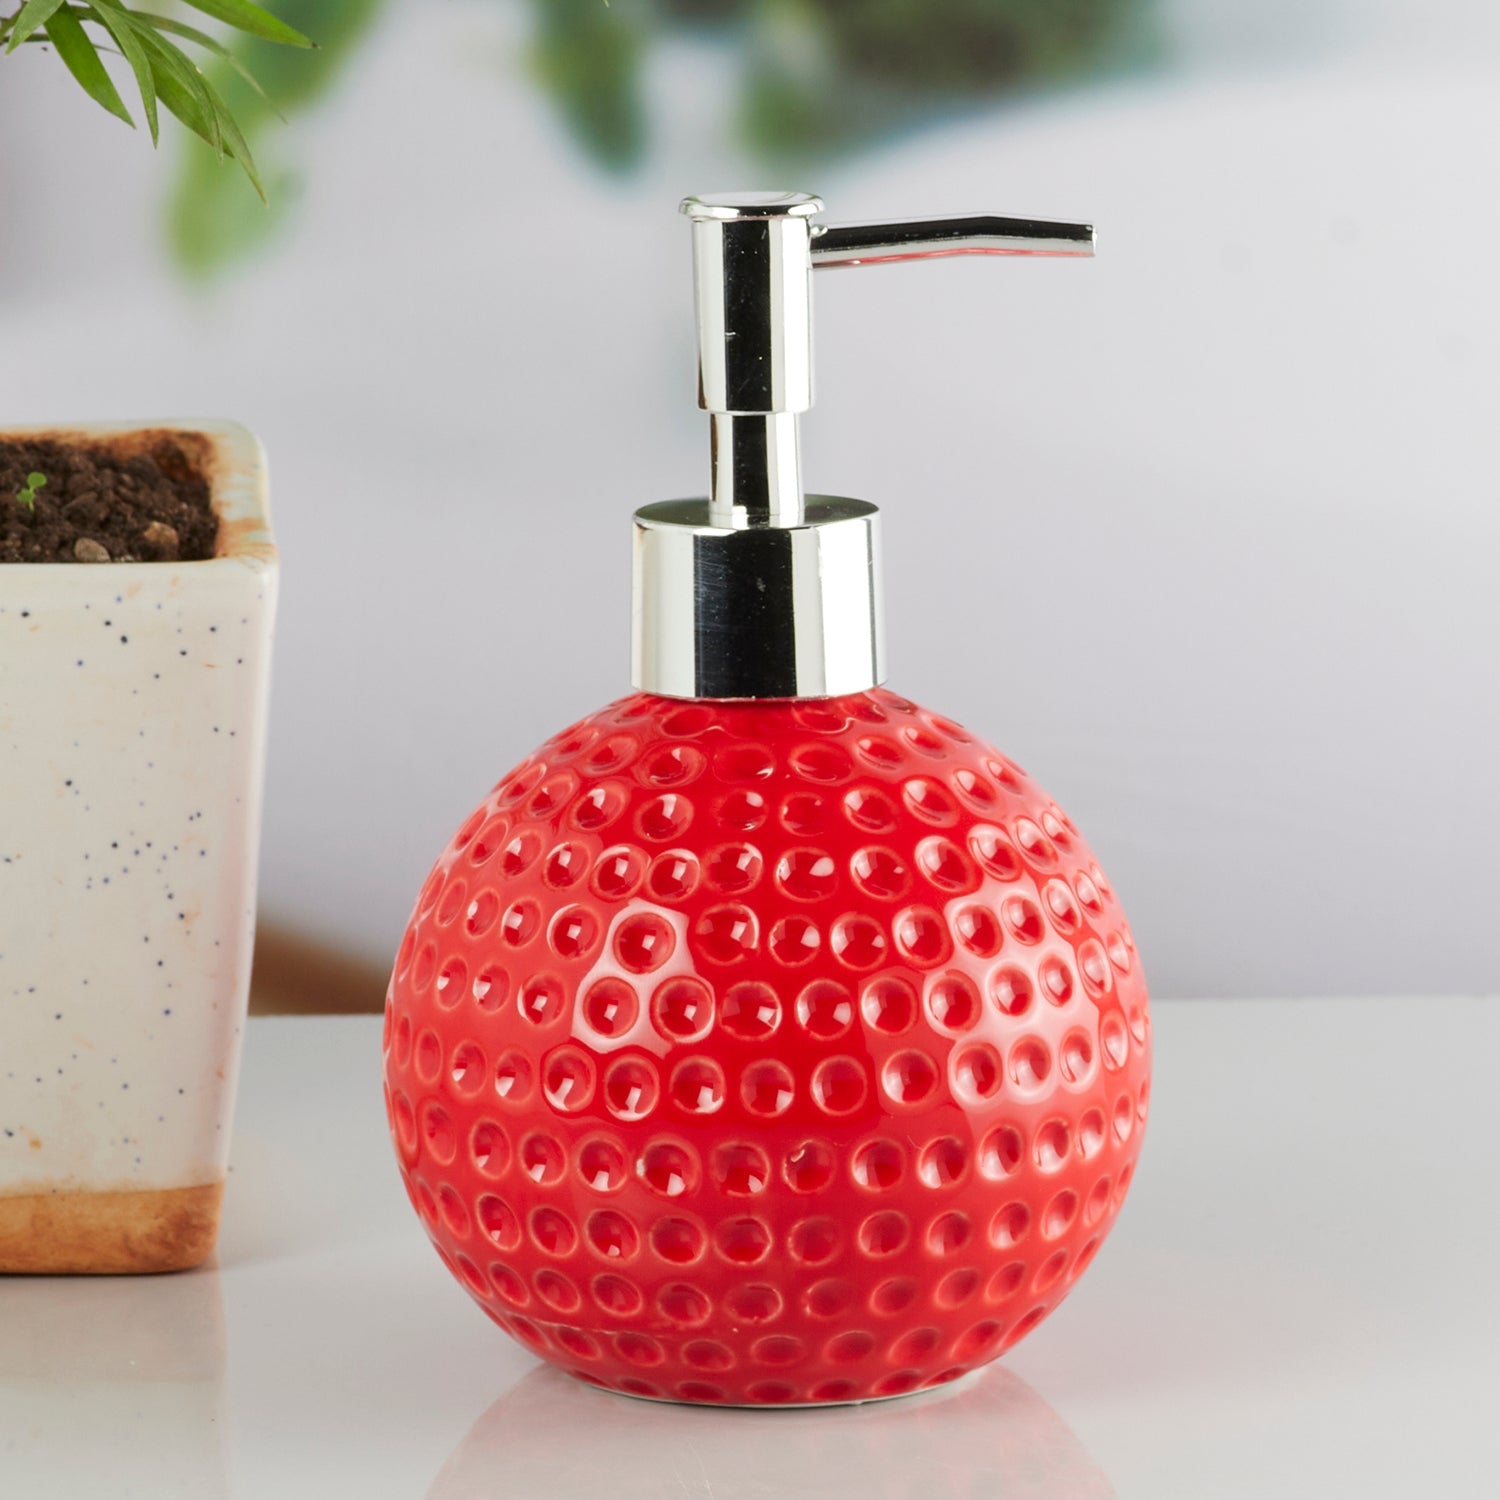 Ceramic Soap Dispenser handwash Pump for Bathroom, Set of 1, White (8653)